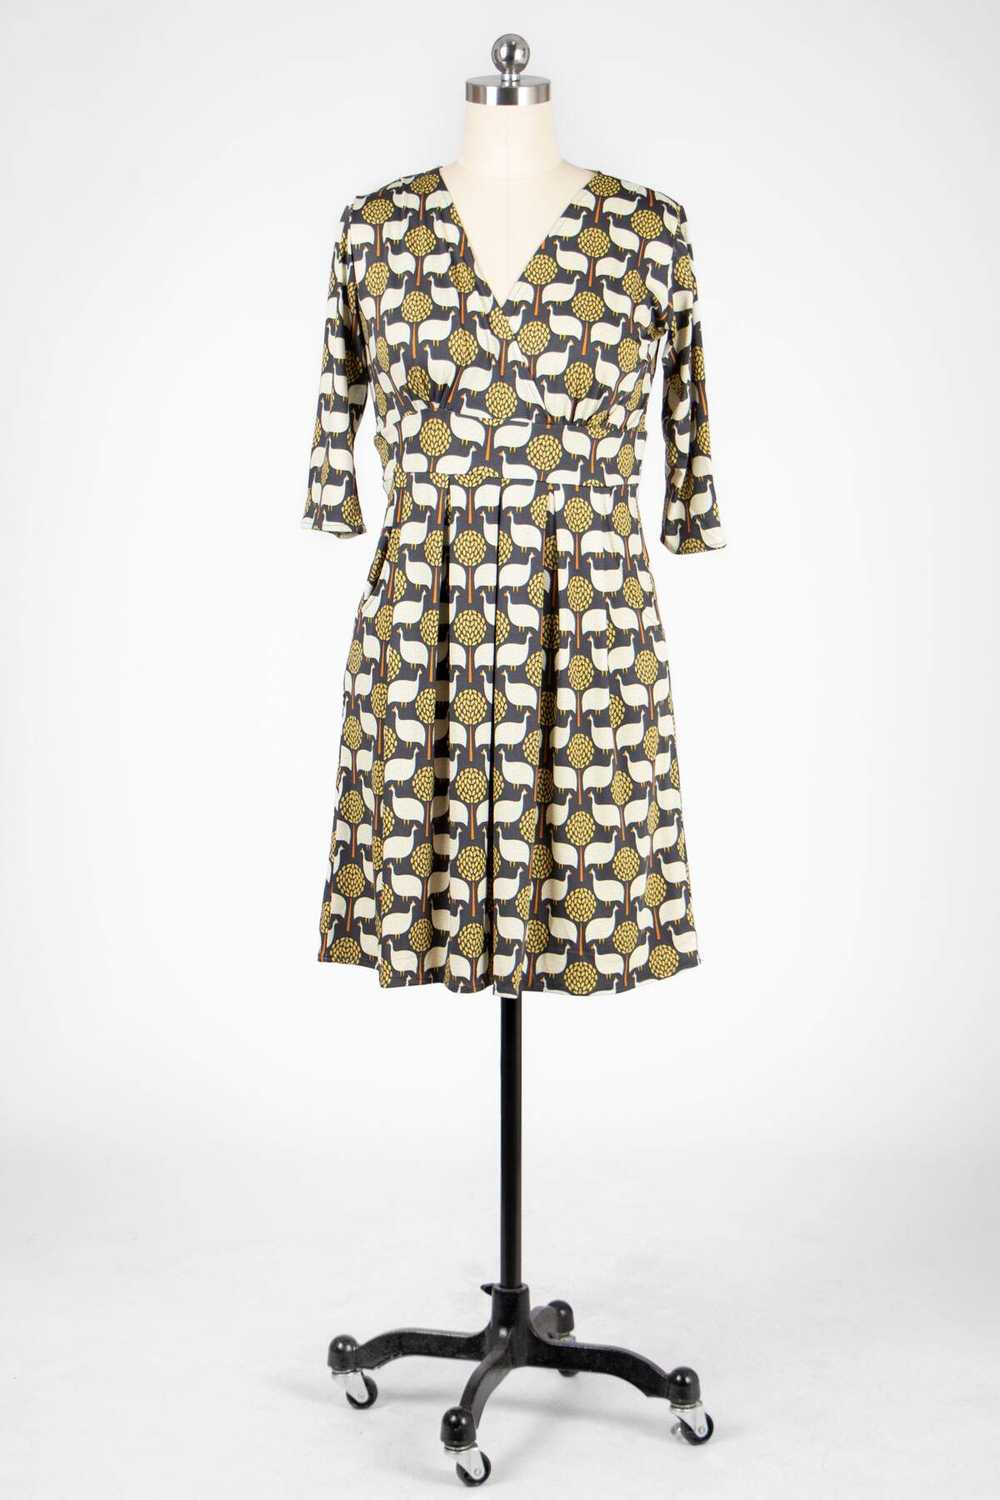 Karina Dresses Penelope Dress - Plume and Bloom - image 6